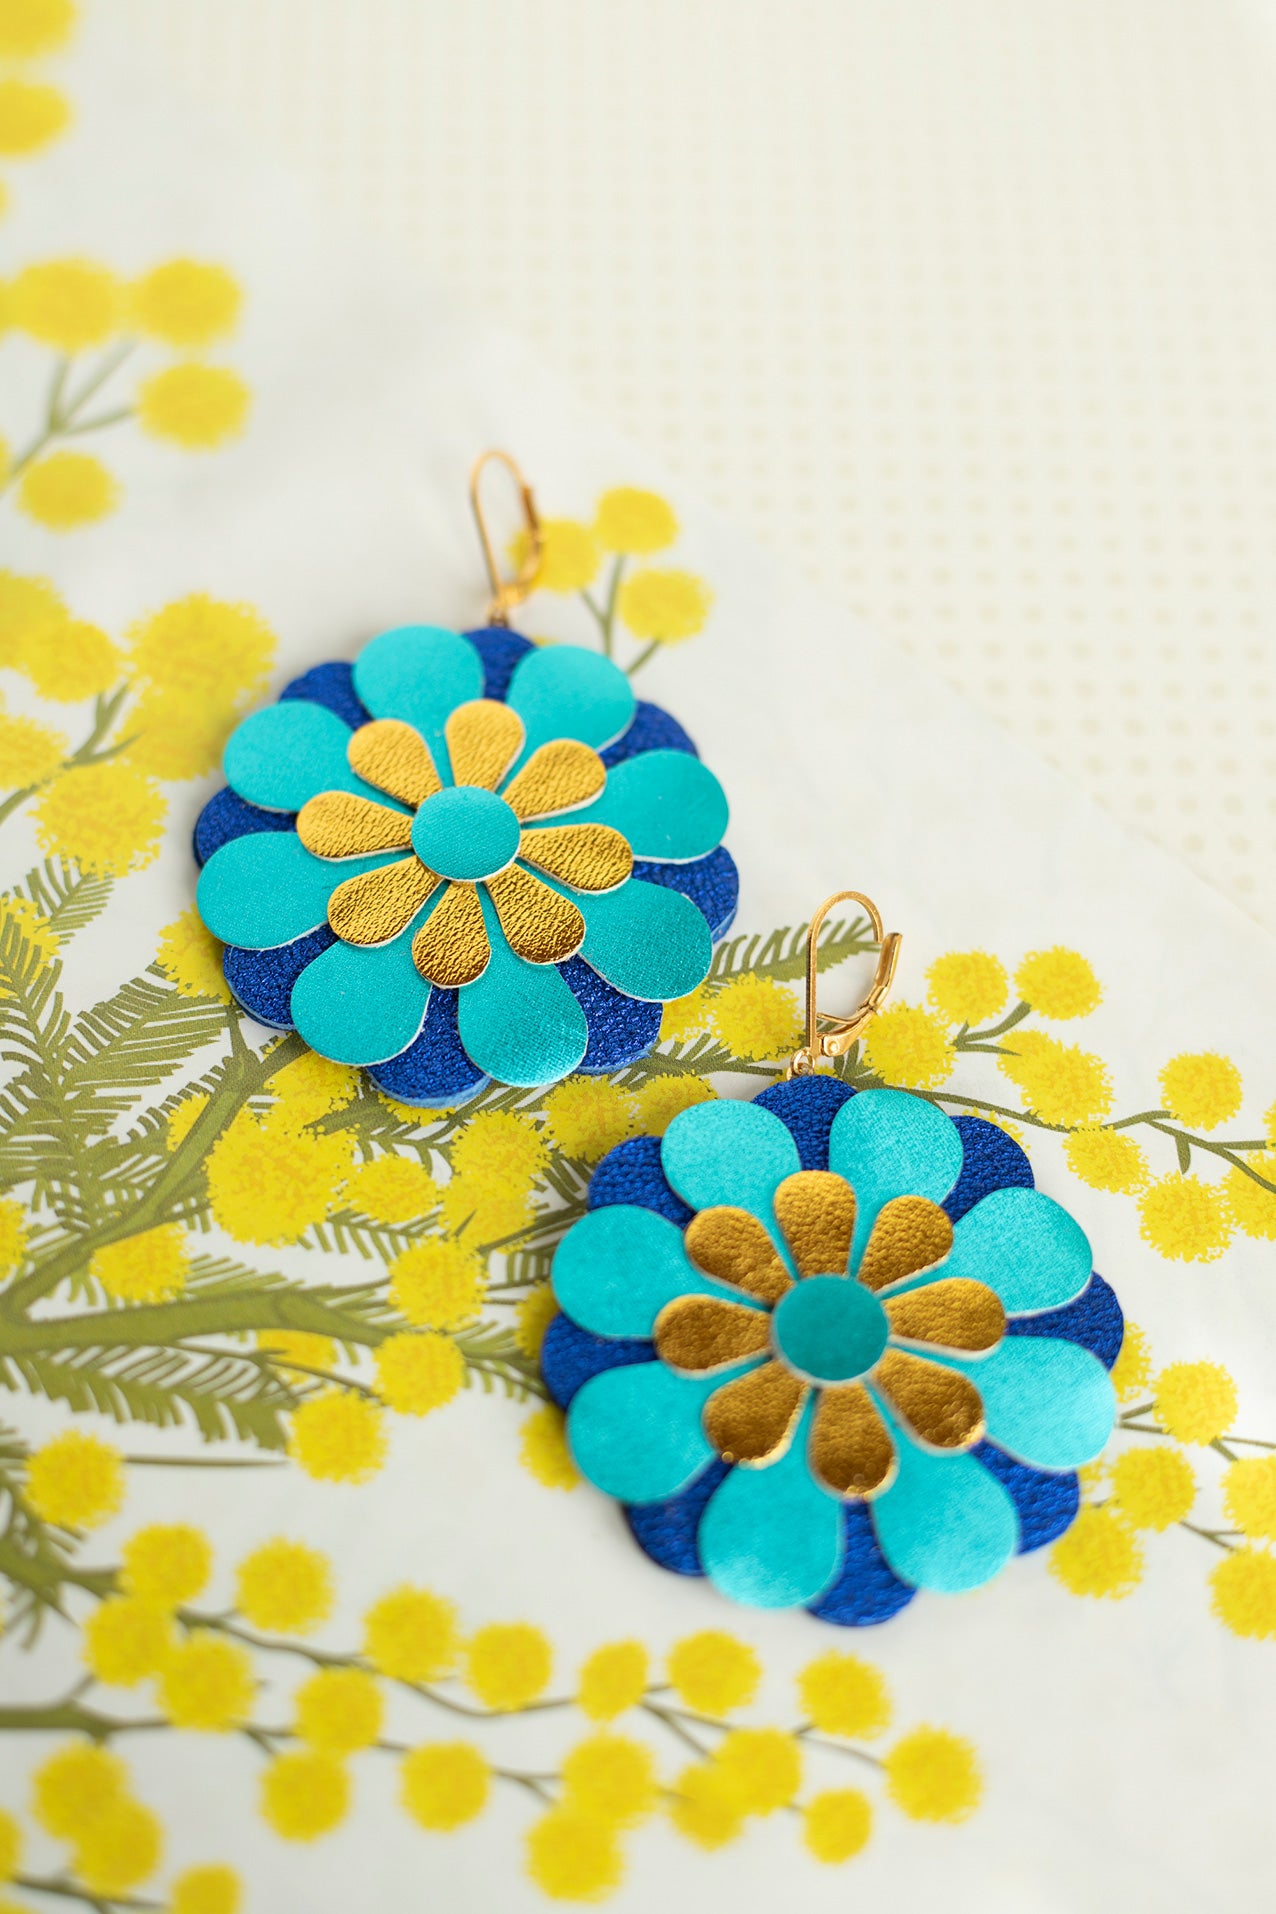 Zinnia flower earrings - turquoise blue and metallic ultramarine blue leather